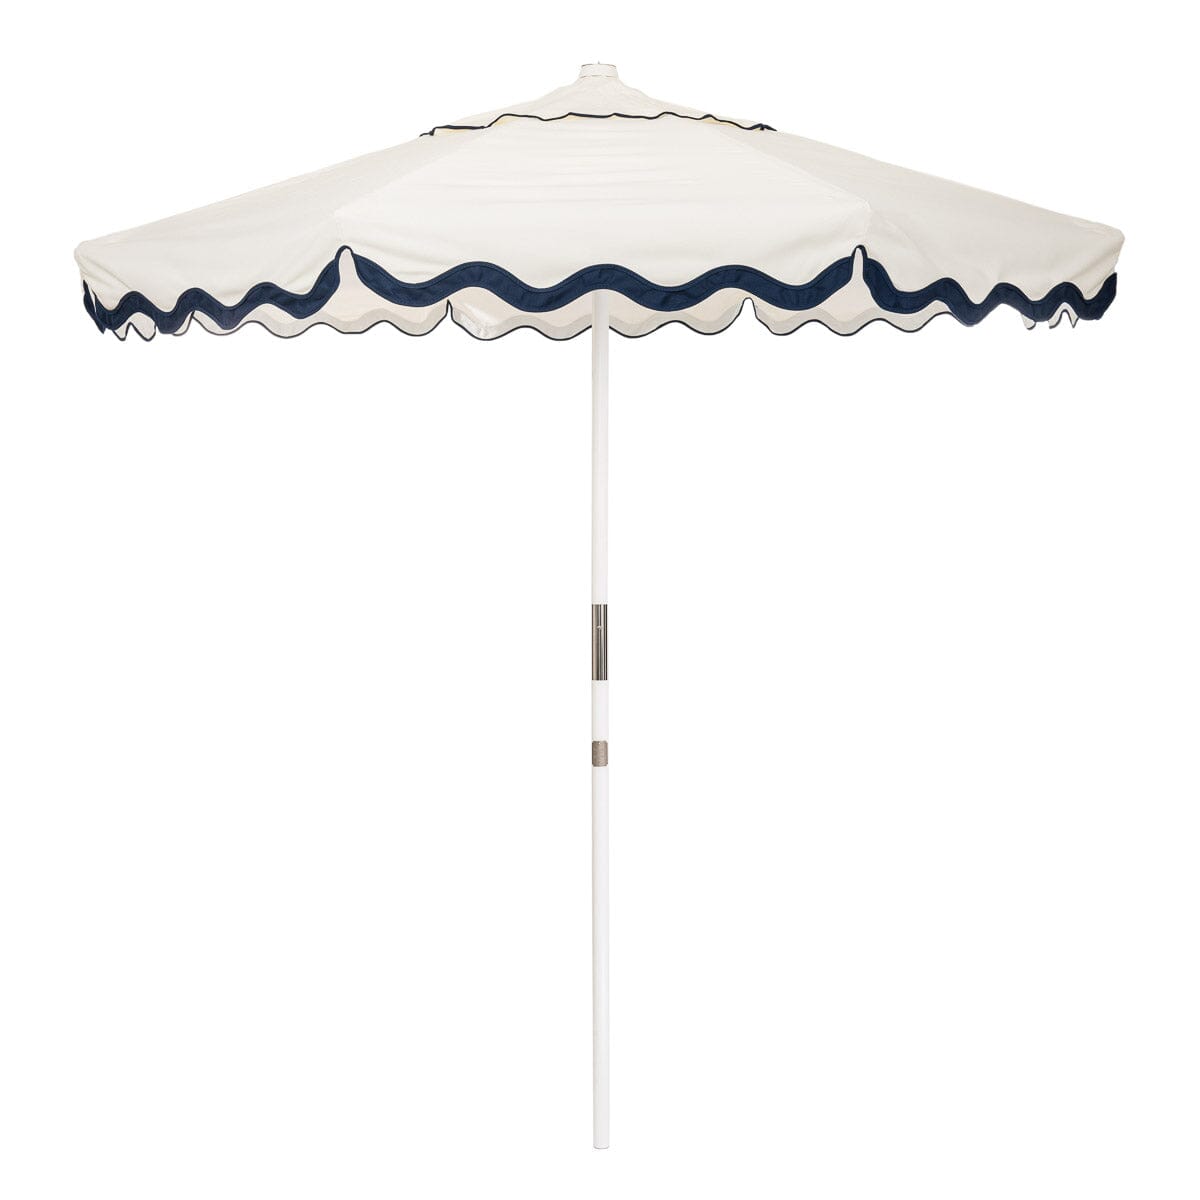 The Market Umbrella - Rivie White Market Umbrella Business & Pleasure Co Aus 